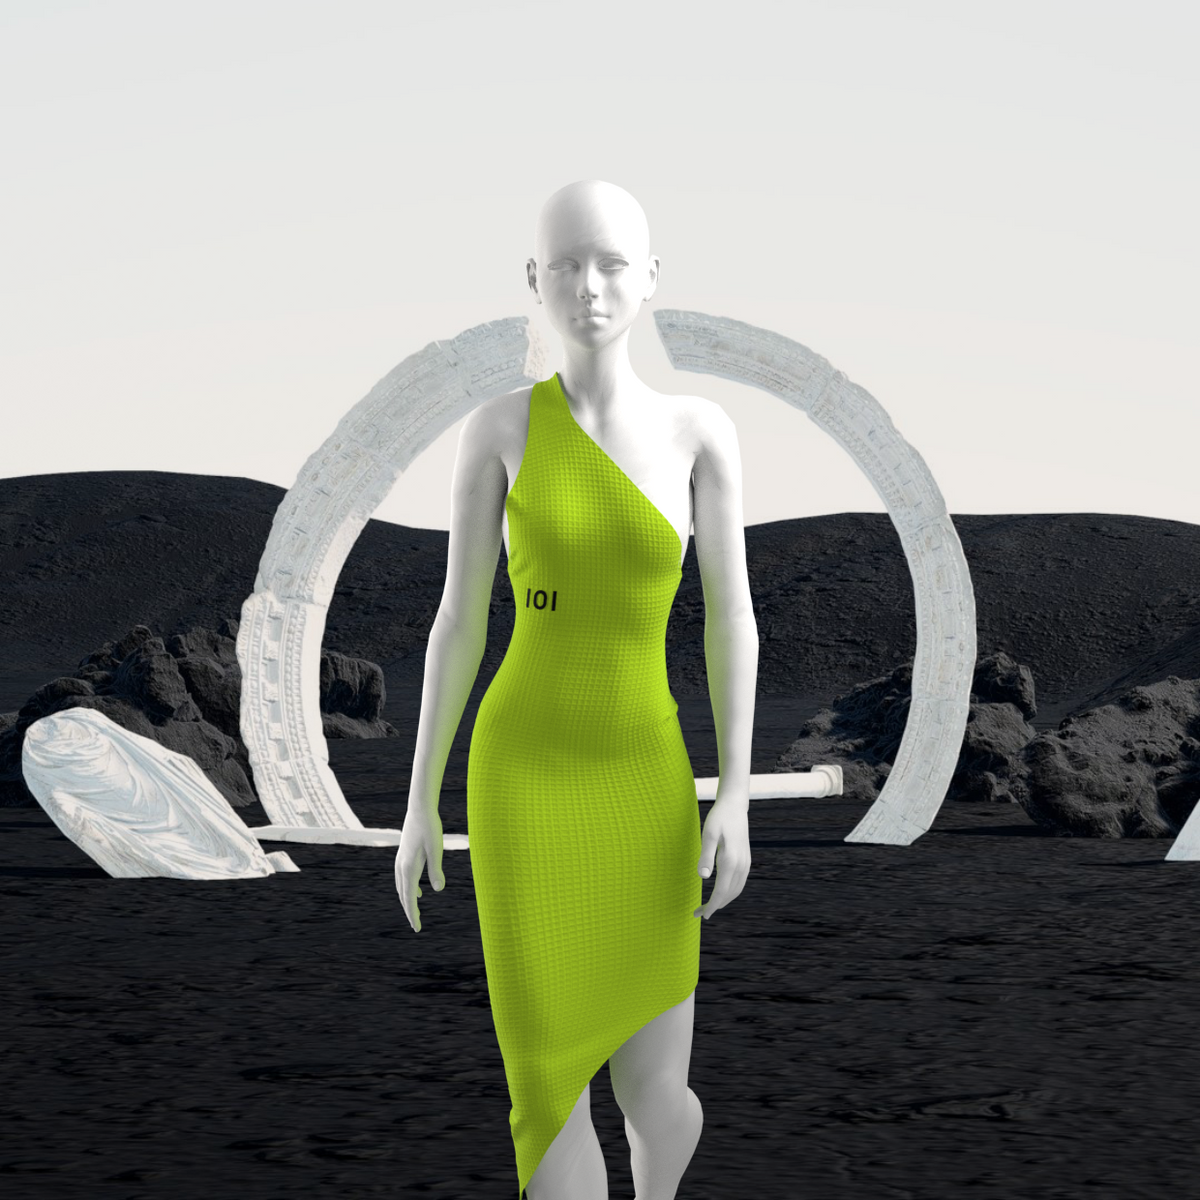 Digital Asymmetric Dress - 101% | 101% clothing | 101% fashion | Fashion 101%